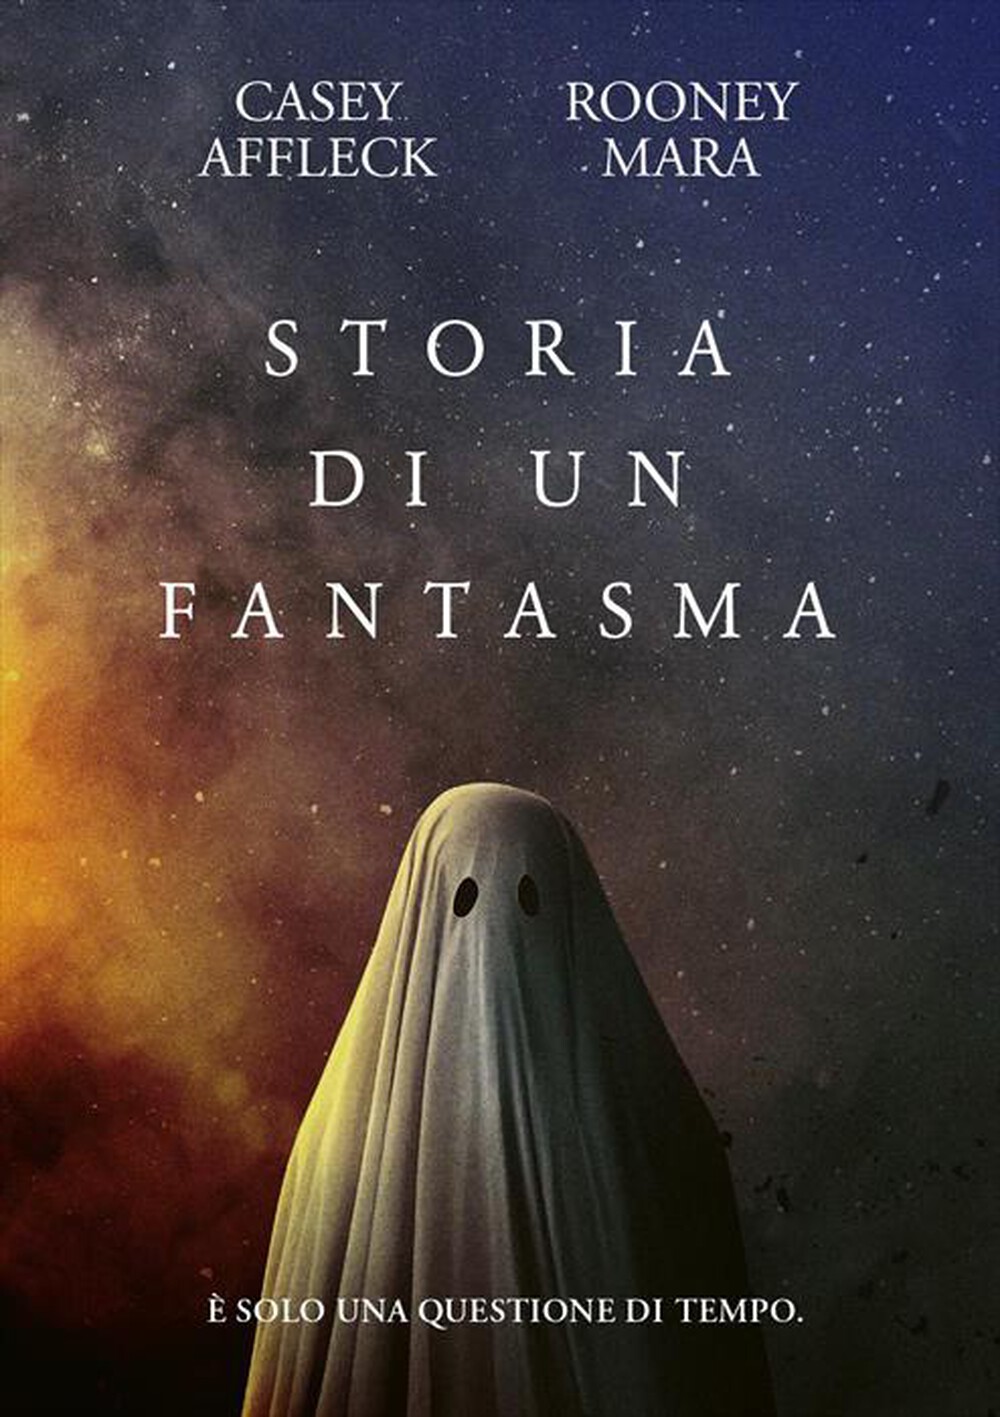 "UNIVERSAL PICTURES - Ghost Story (A) - Storia Di Un Fantasma"